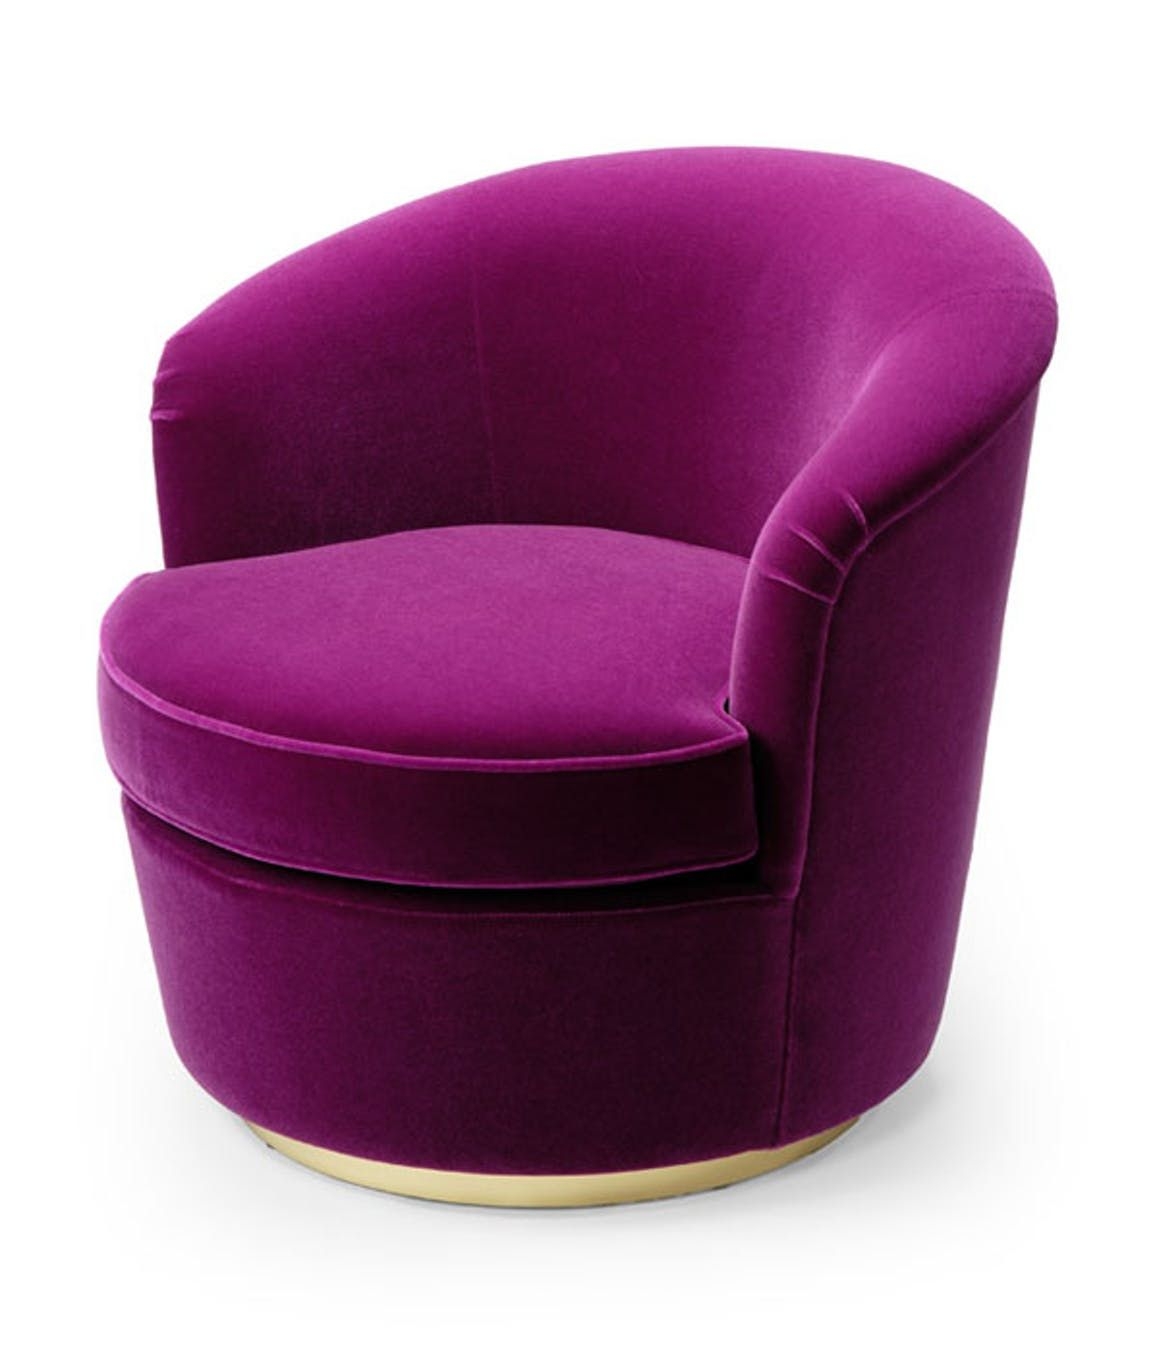 Purple computer chair